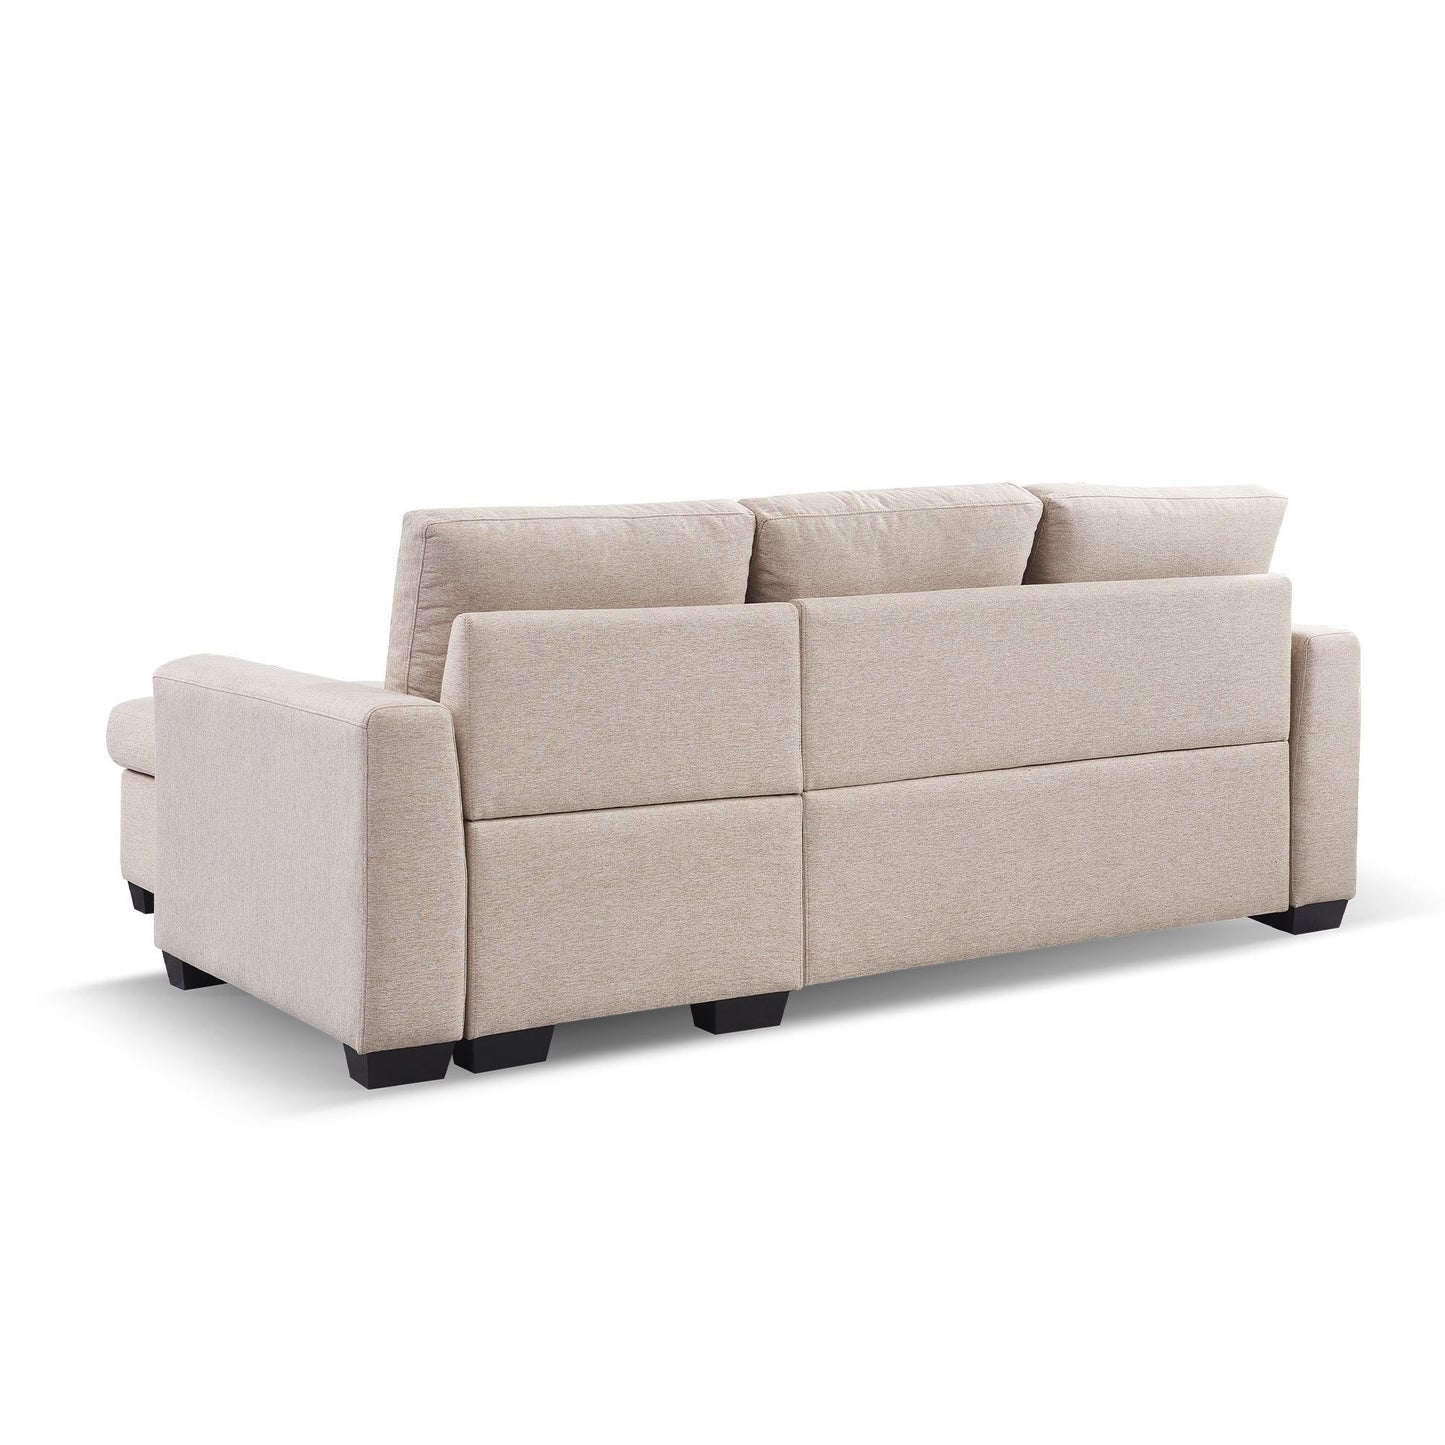 92" Beige Polyester Blend Convertible Futon Sleeper Sofa With Black Legs